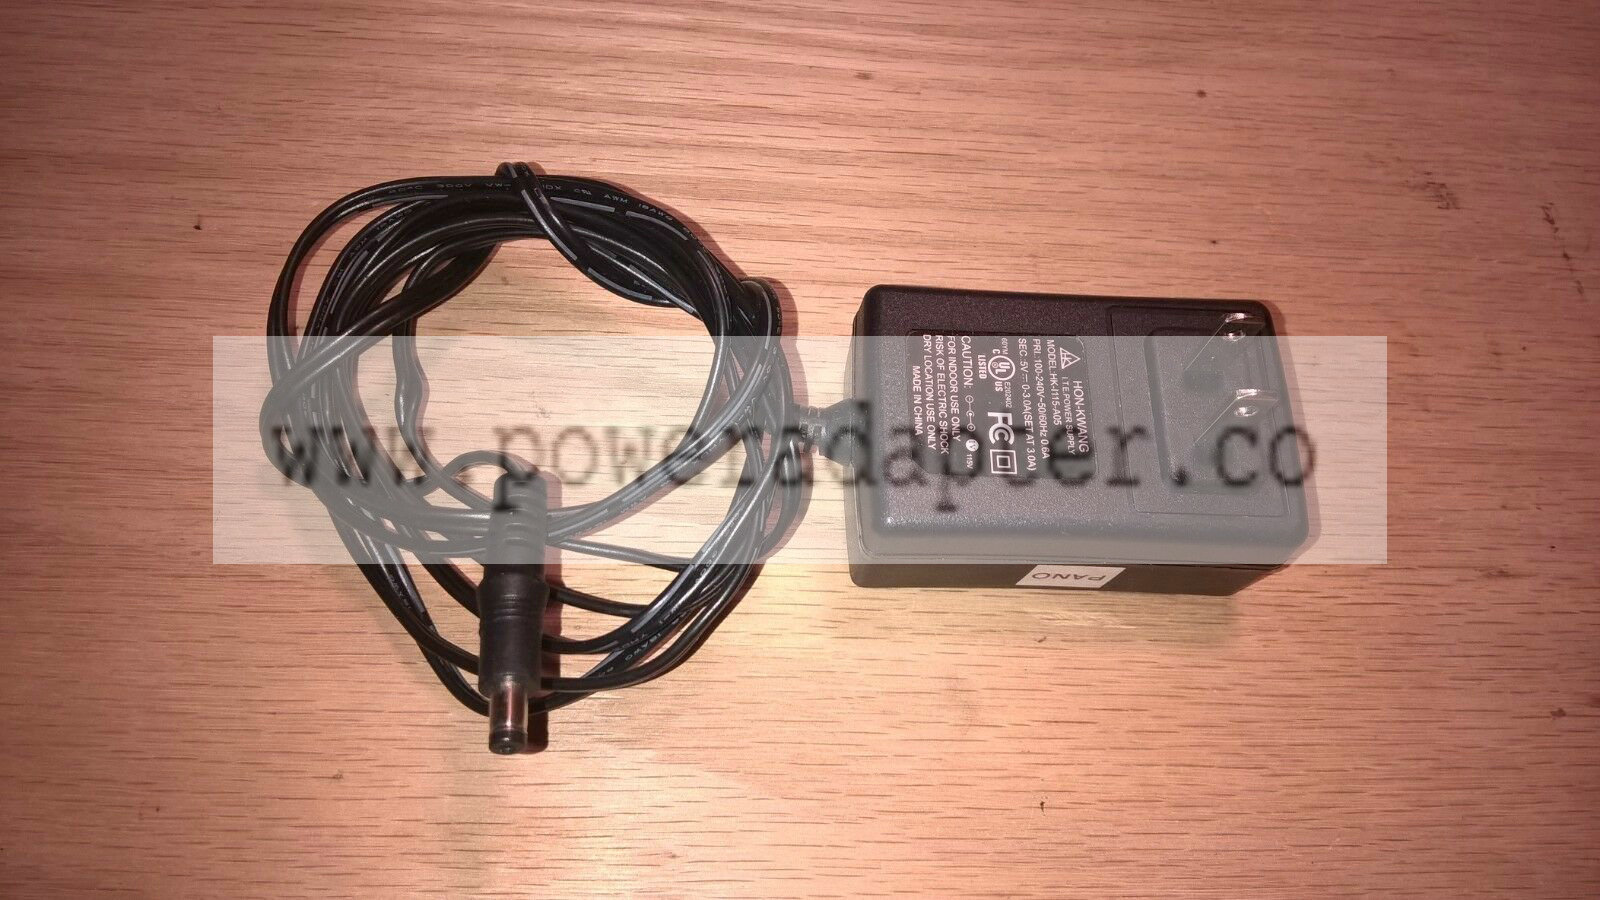 TESTED HON-KWANG HK-I115-A05 5V 3A Switching Power Supply Cord PSU AC Adapter Brand: Hon Kwang Charger Type: Mains C